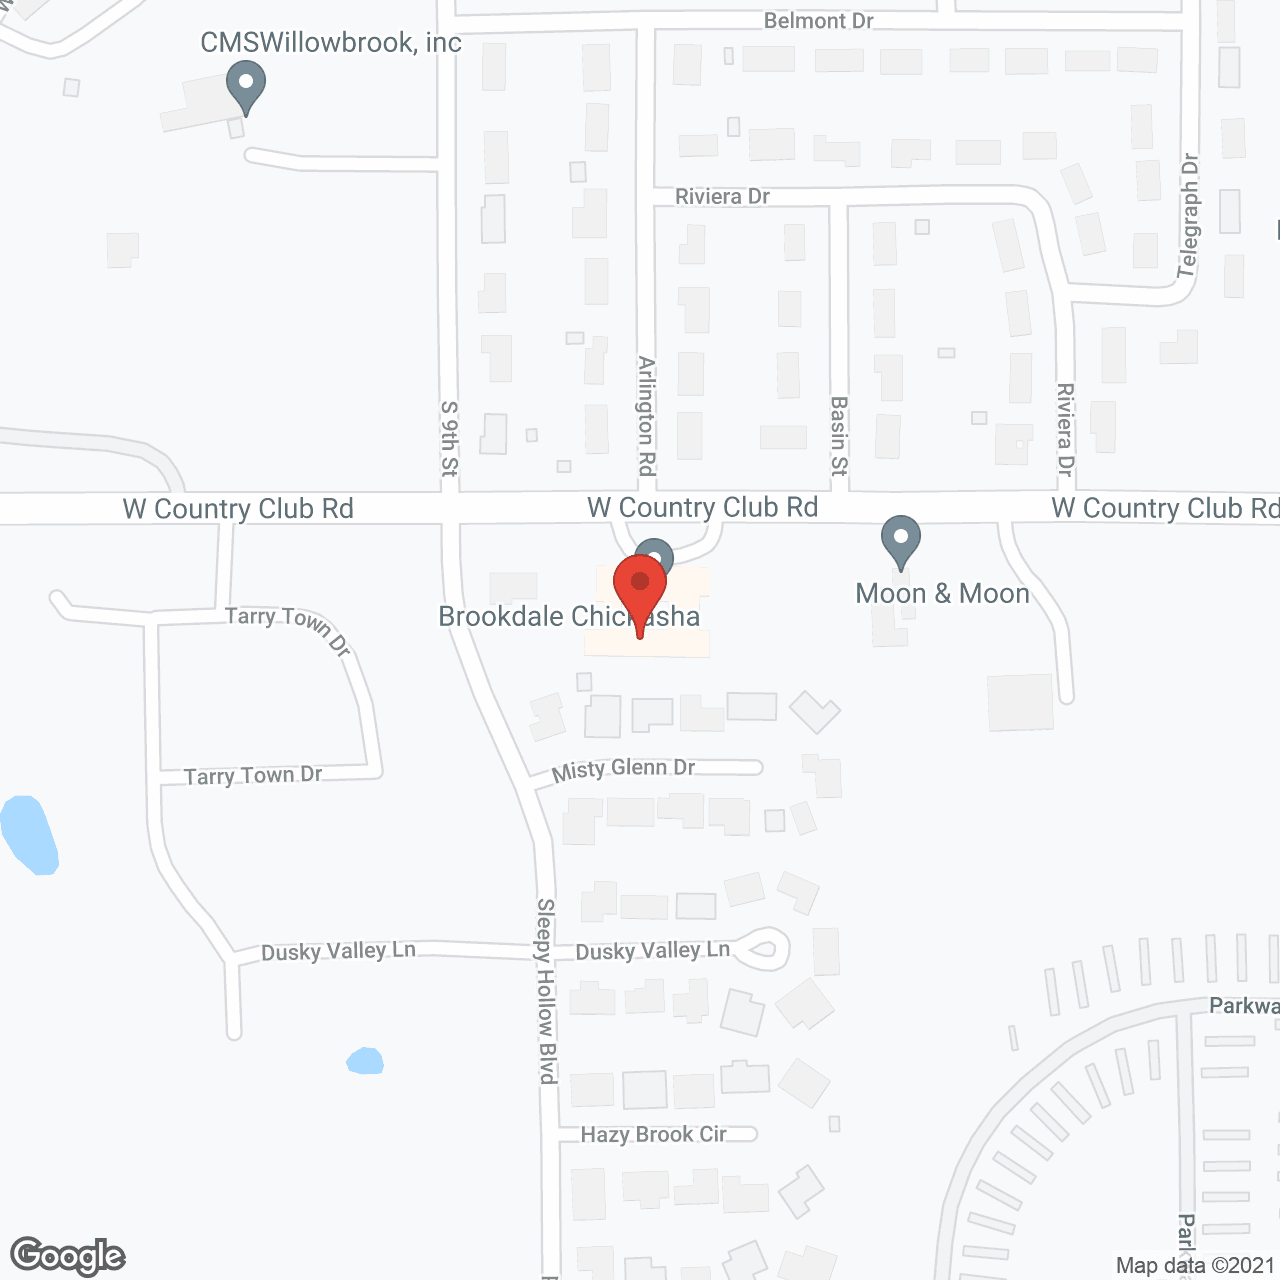 Brookdale Chickasha in google map